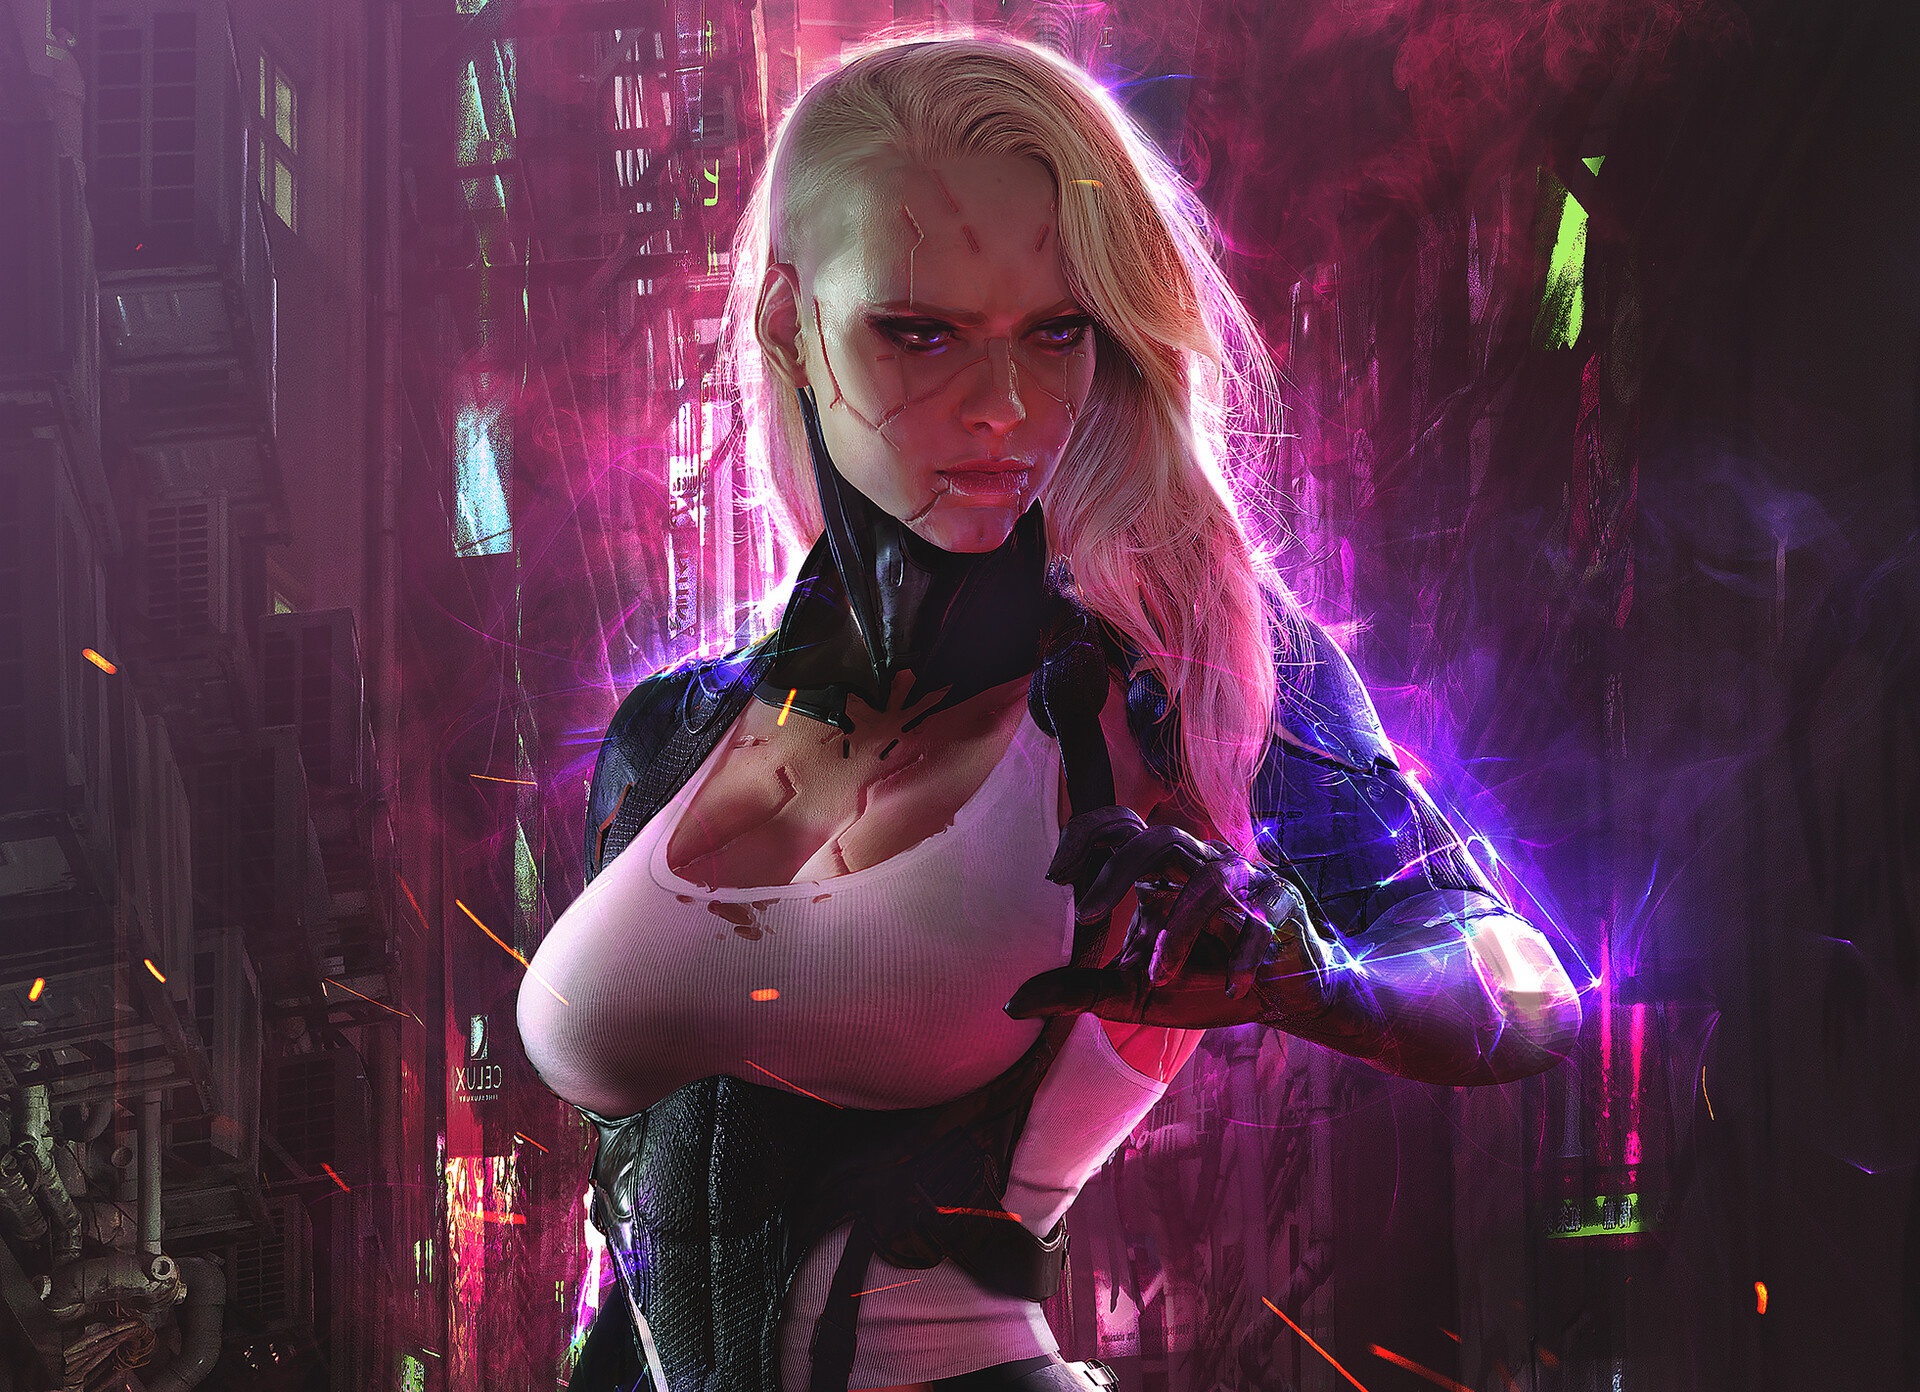 Cyborg Cyberpunk Science Fiction Futuristic Women Blonde Purple Eyes Fantasy Art Fantasy Girl Artwor 1920x1392